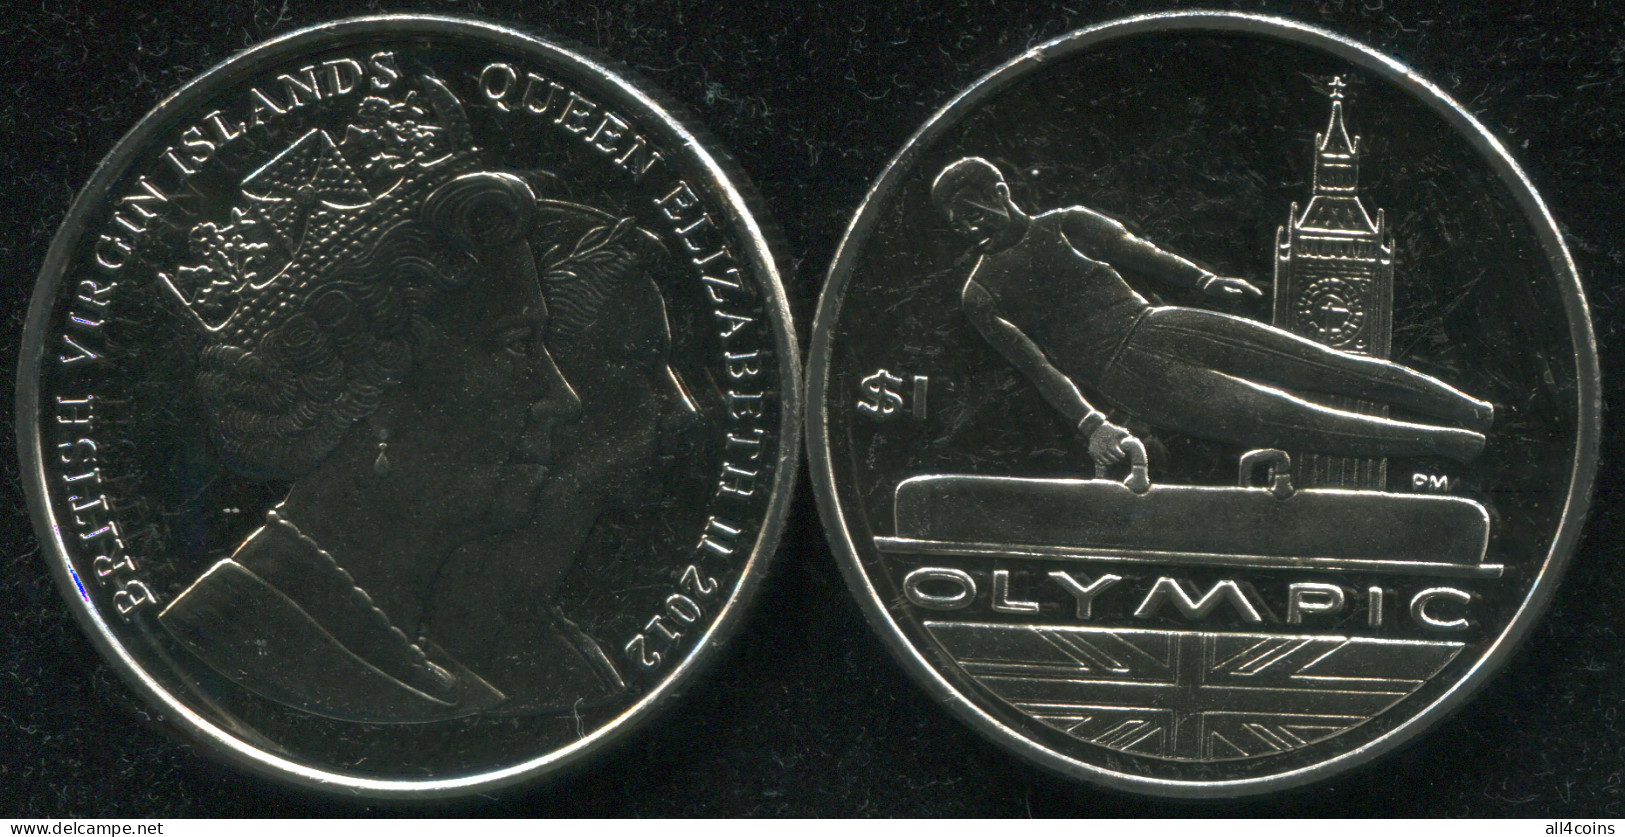 British Virgin Islands. 1 Dollar. 2012 (Coin KM#NL. Unc) Olympiad. Gymnastics - Iles Vièrges Britanniques